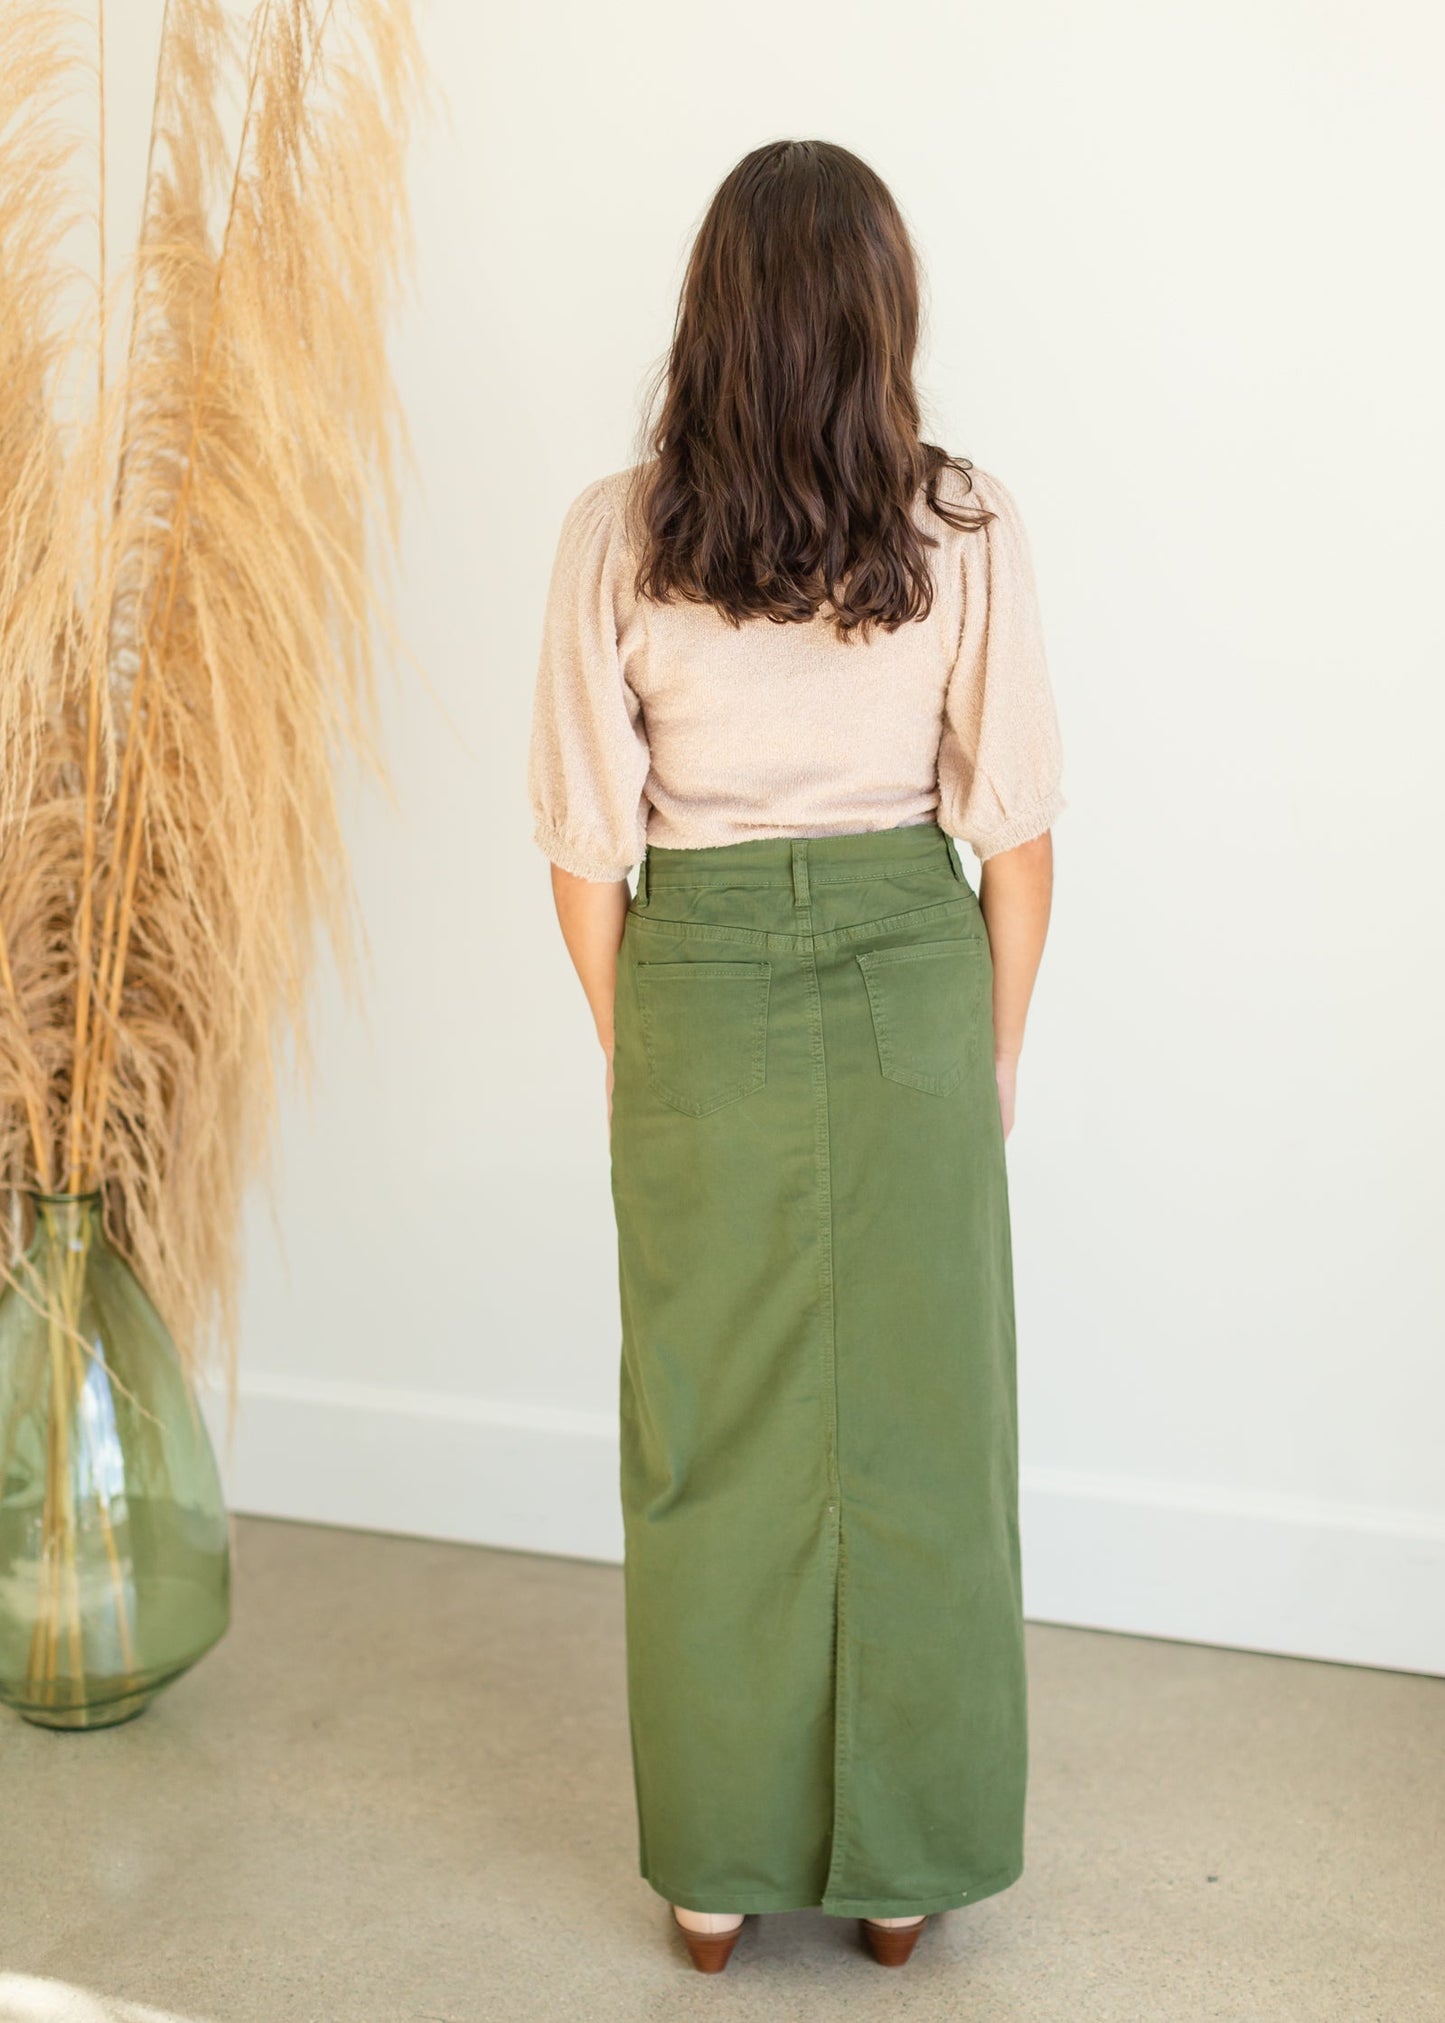 Stella Olive Green Long Denim Maxi Skirt - FINAL SALE Skirts